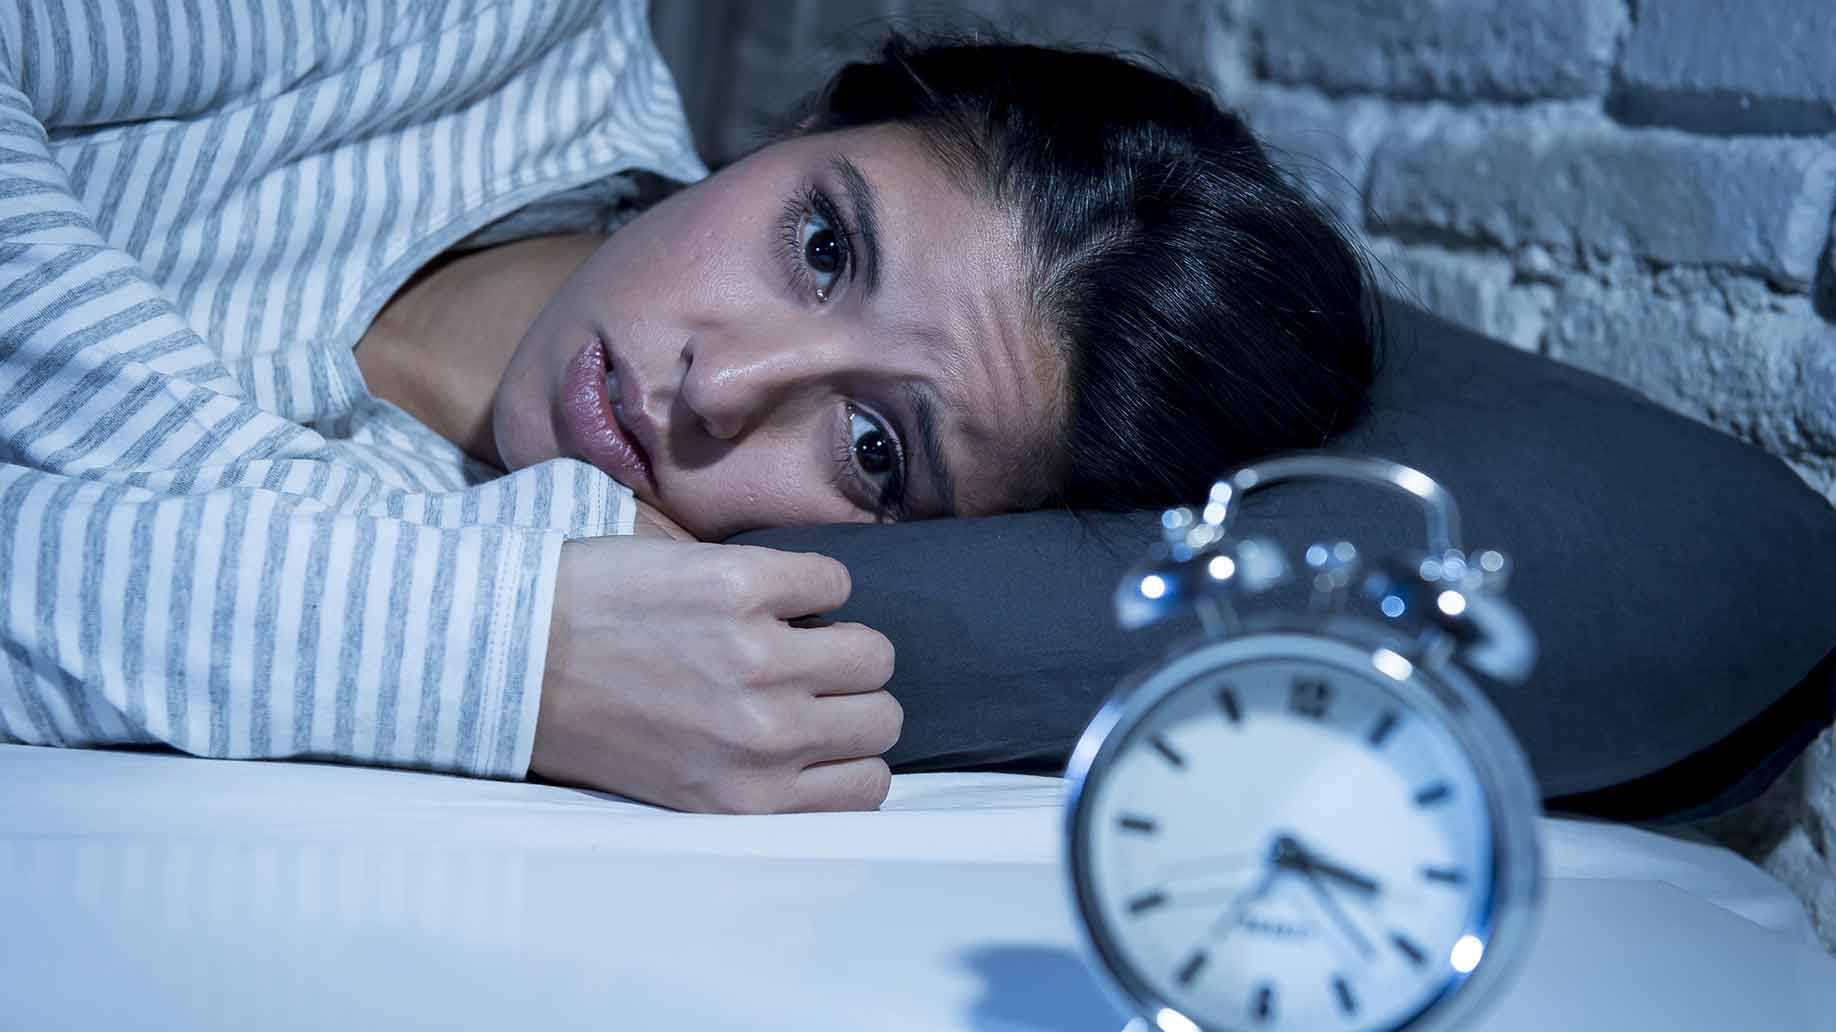 insomnia hormone imbalance menopause menses periods pms natural remedies